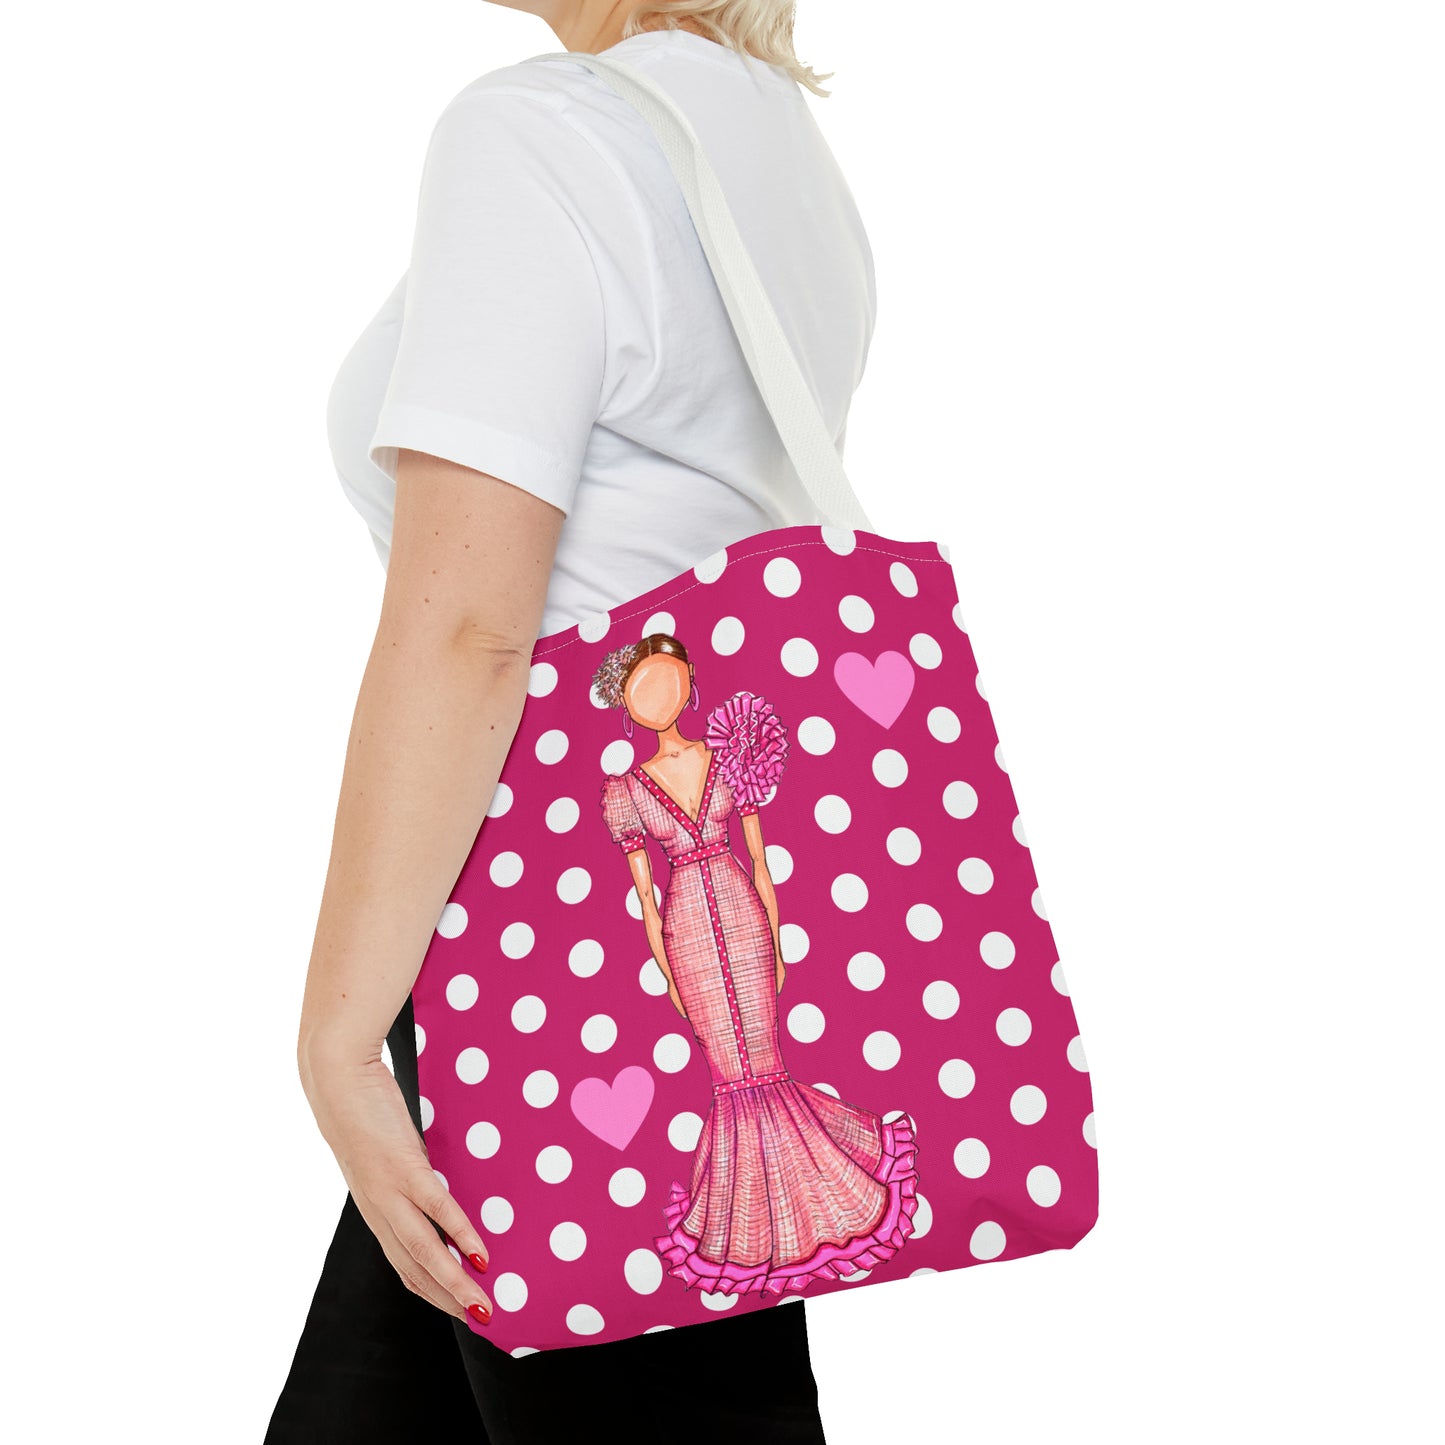 a woman carrying a pink polka dot purse